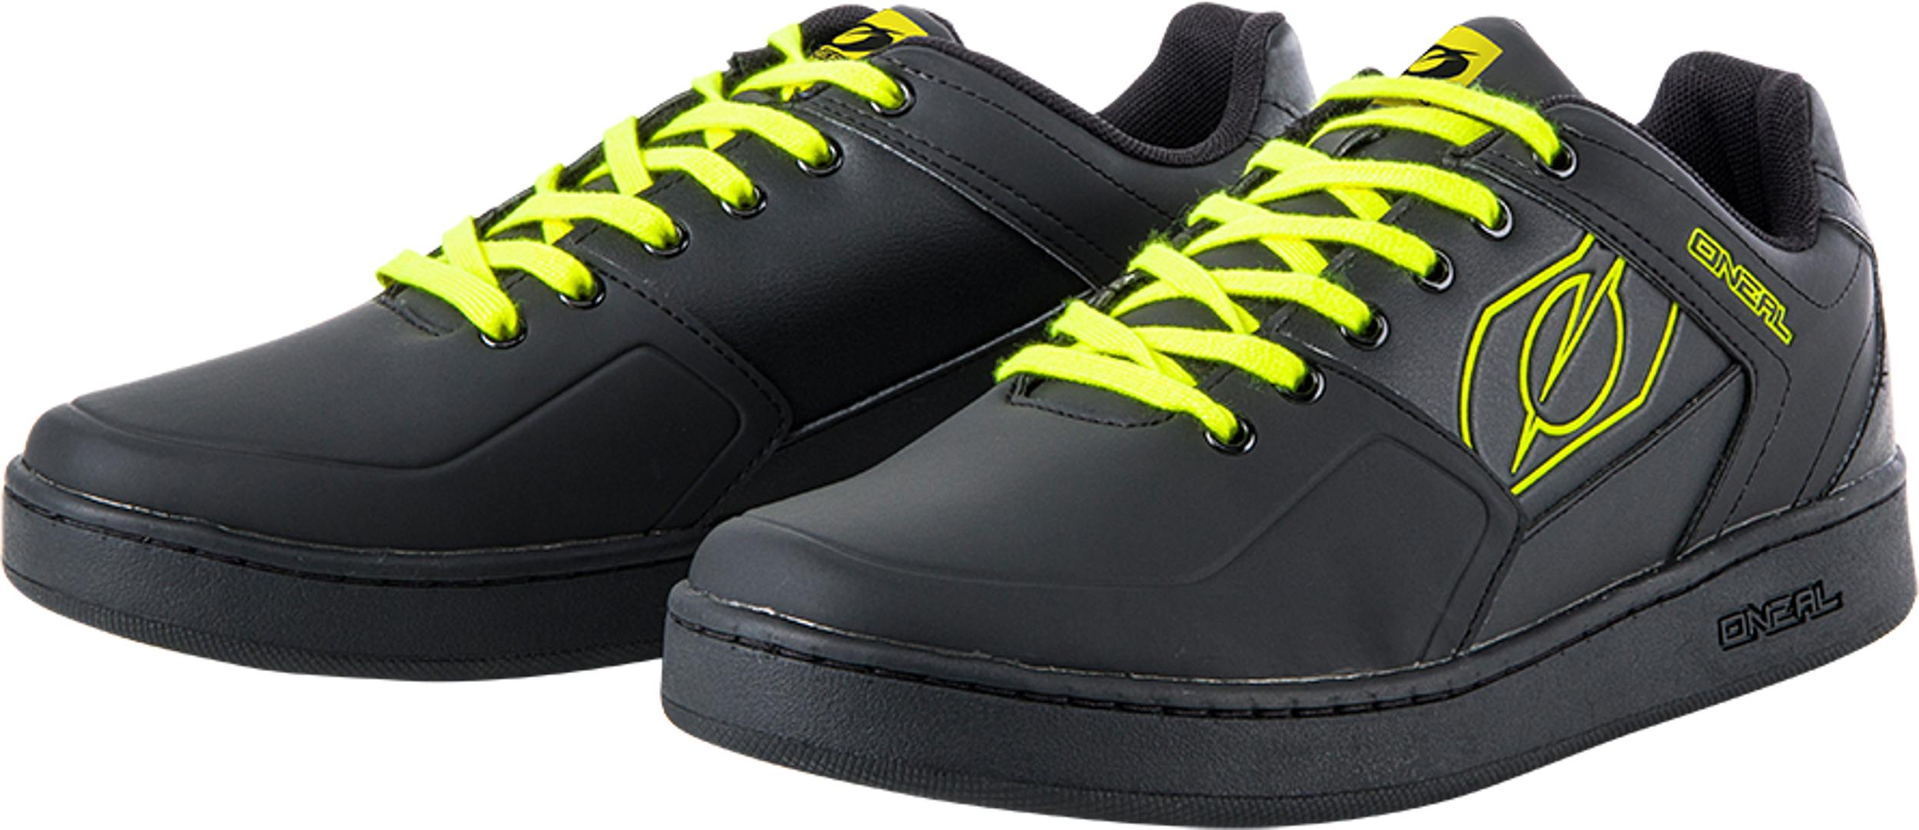 Oneal Pinned Flat Pedal Schuhe, schwarz-gelb, Größe 44, schwarz-gelb, Größe 44